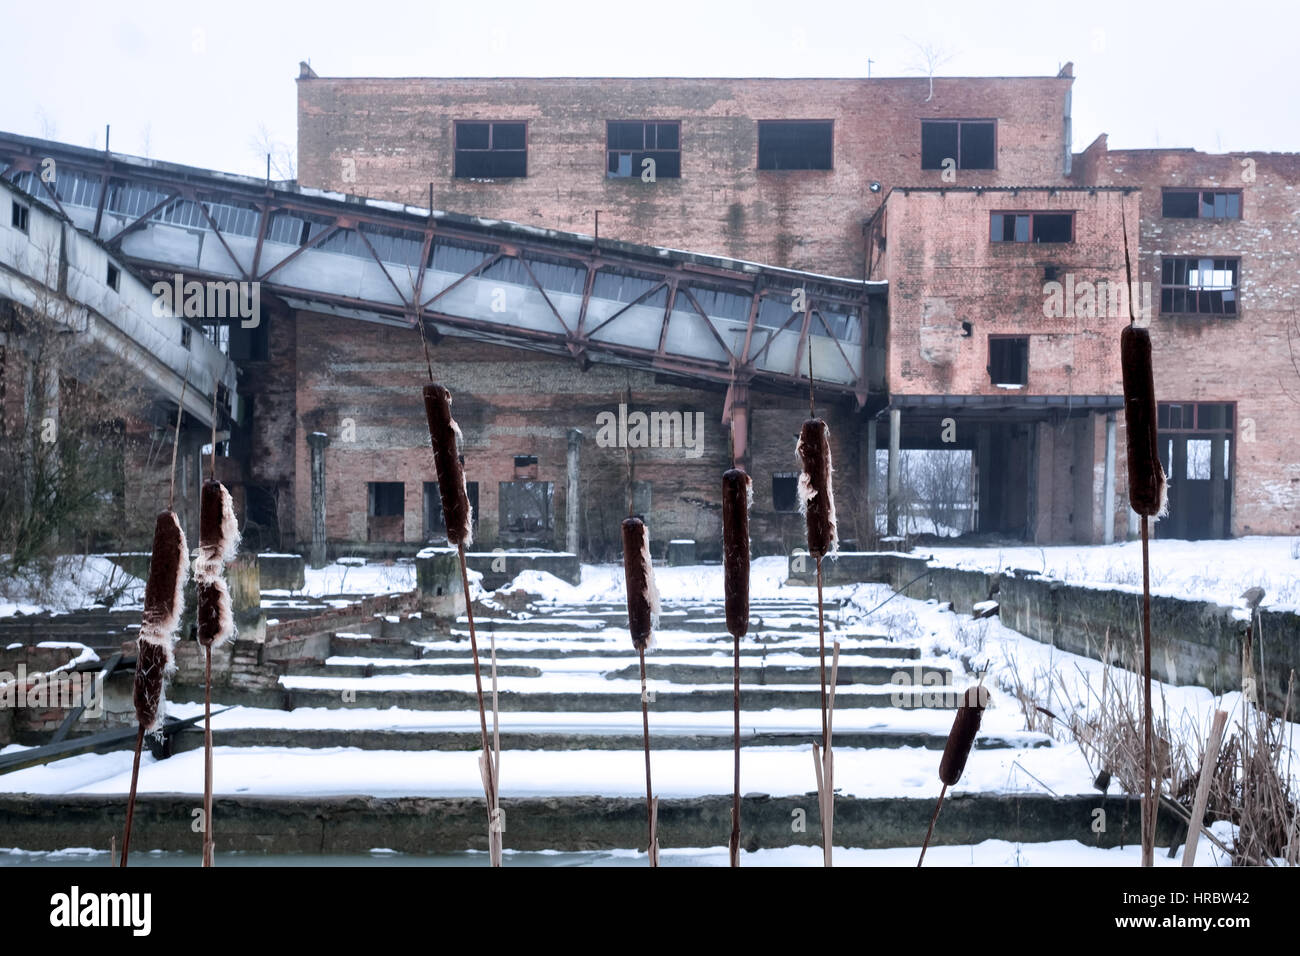 Urban Exploration. Zerstörten Fabrik Altbauwohnung Stockfoto